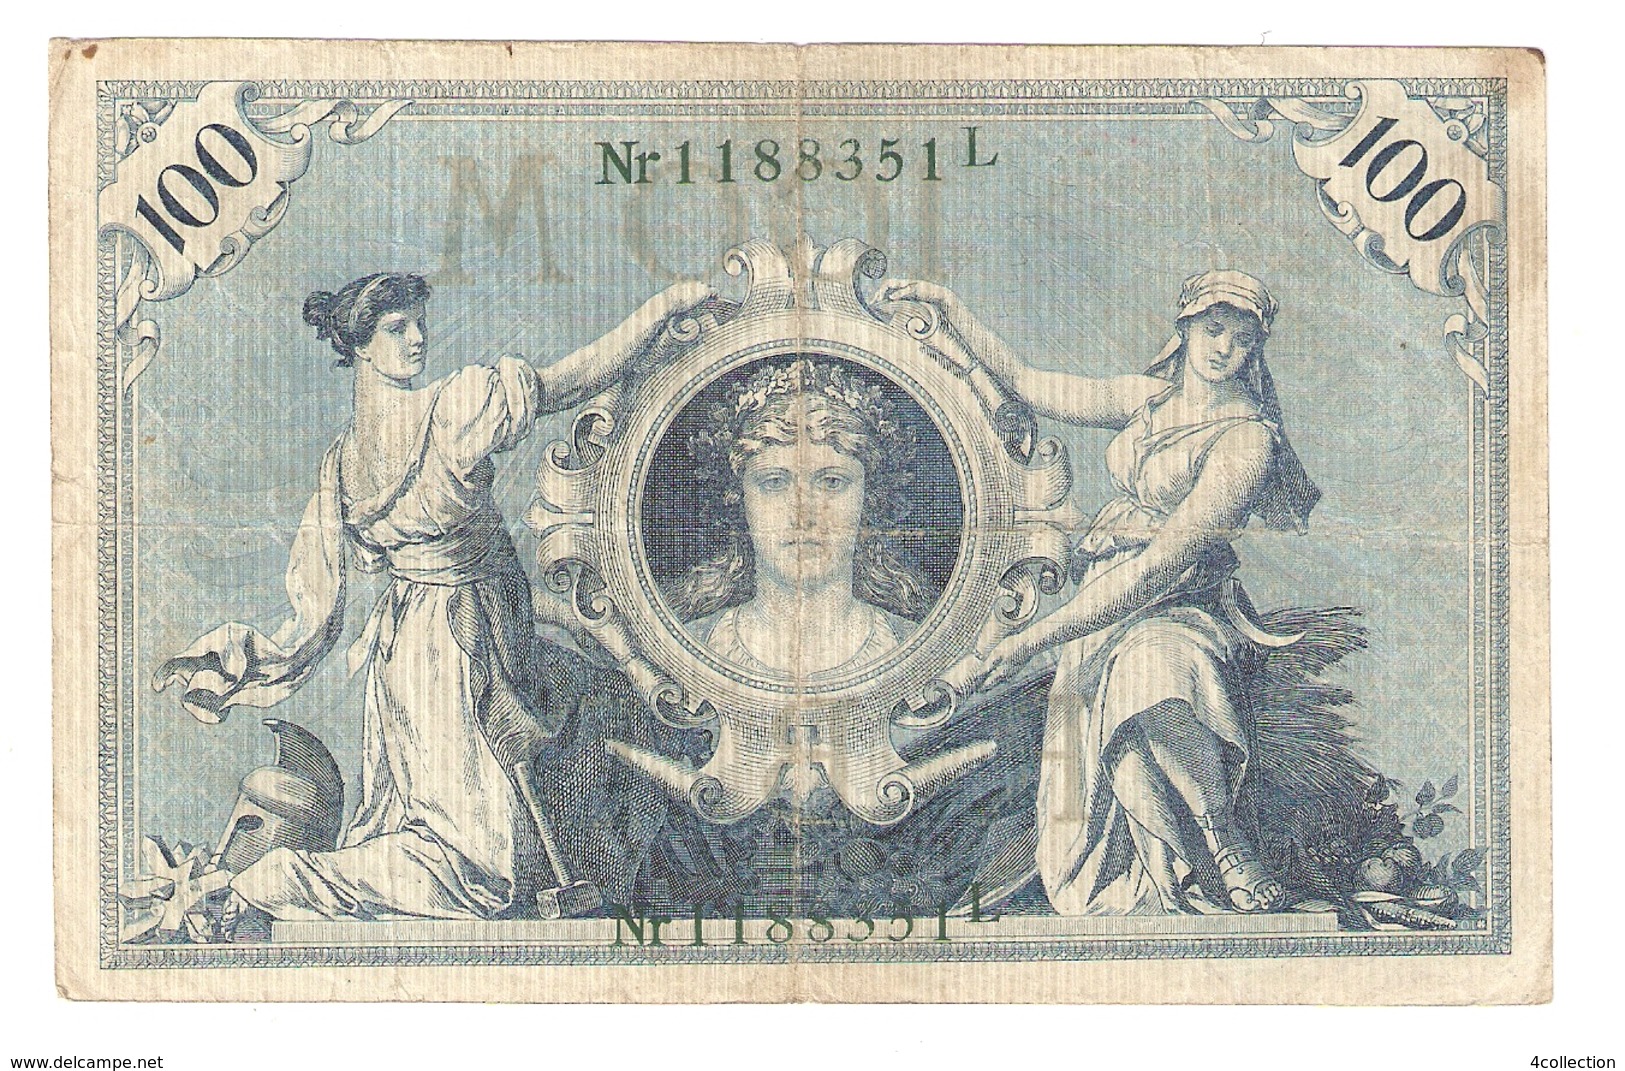 Pa6. Germany German Empire 100 Mark 1908 Reichsbanknote Green Seal & Ser. 1188351 L - 100 Mark